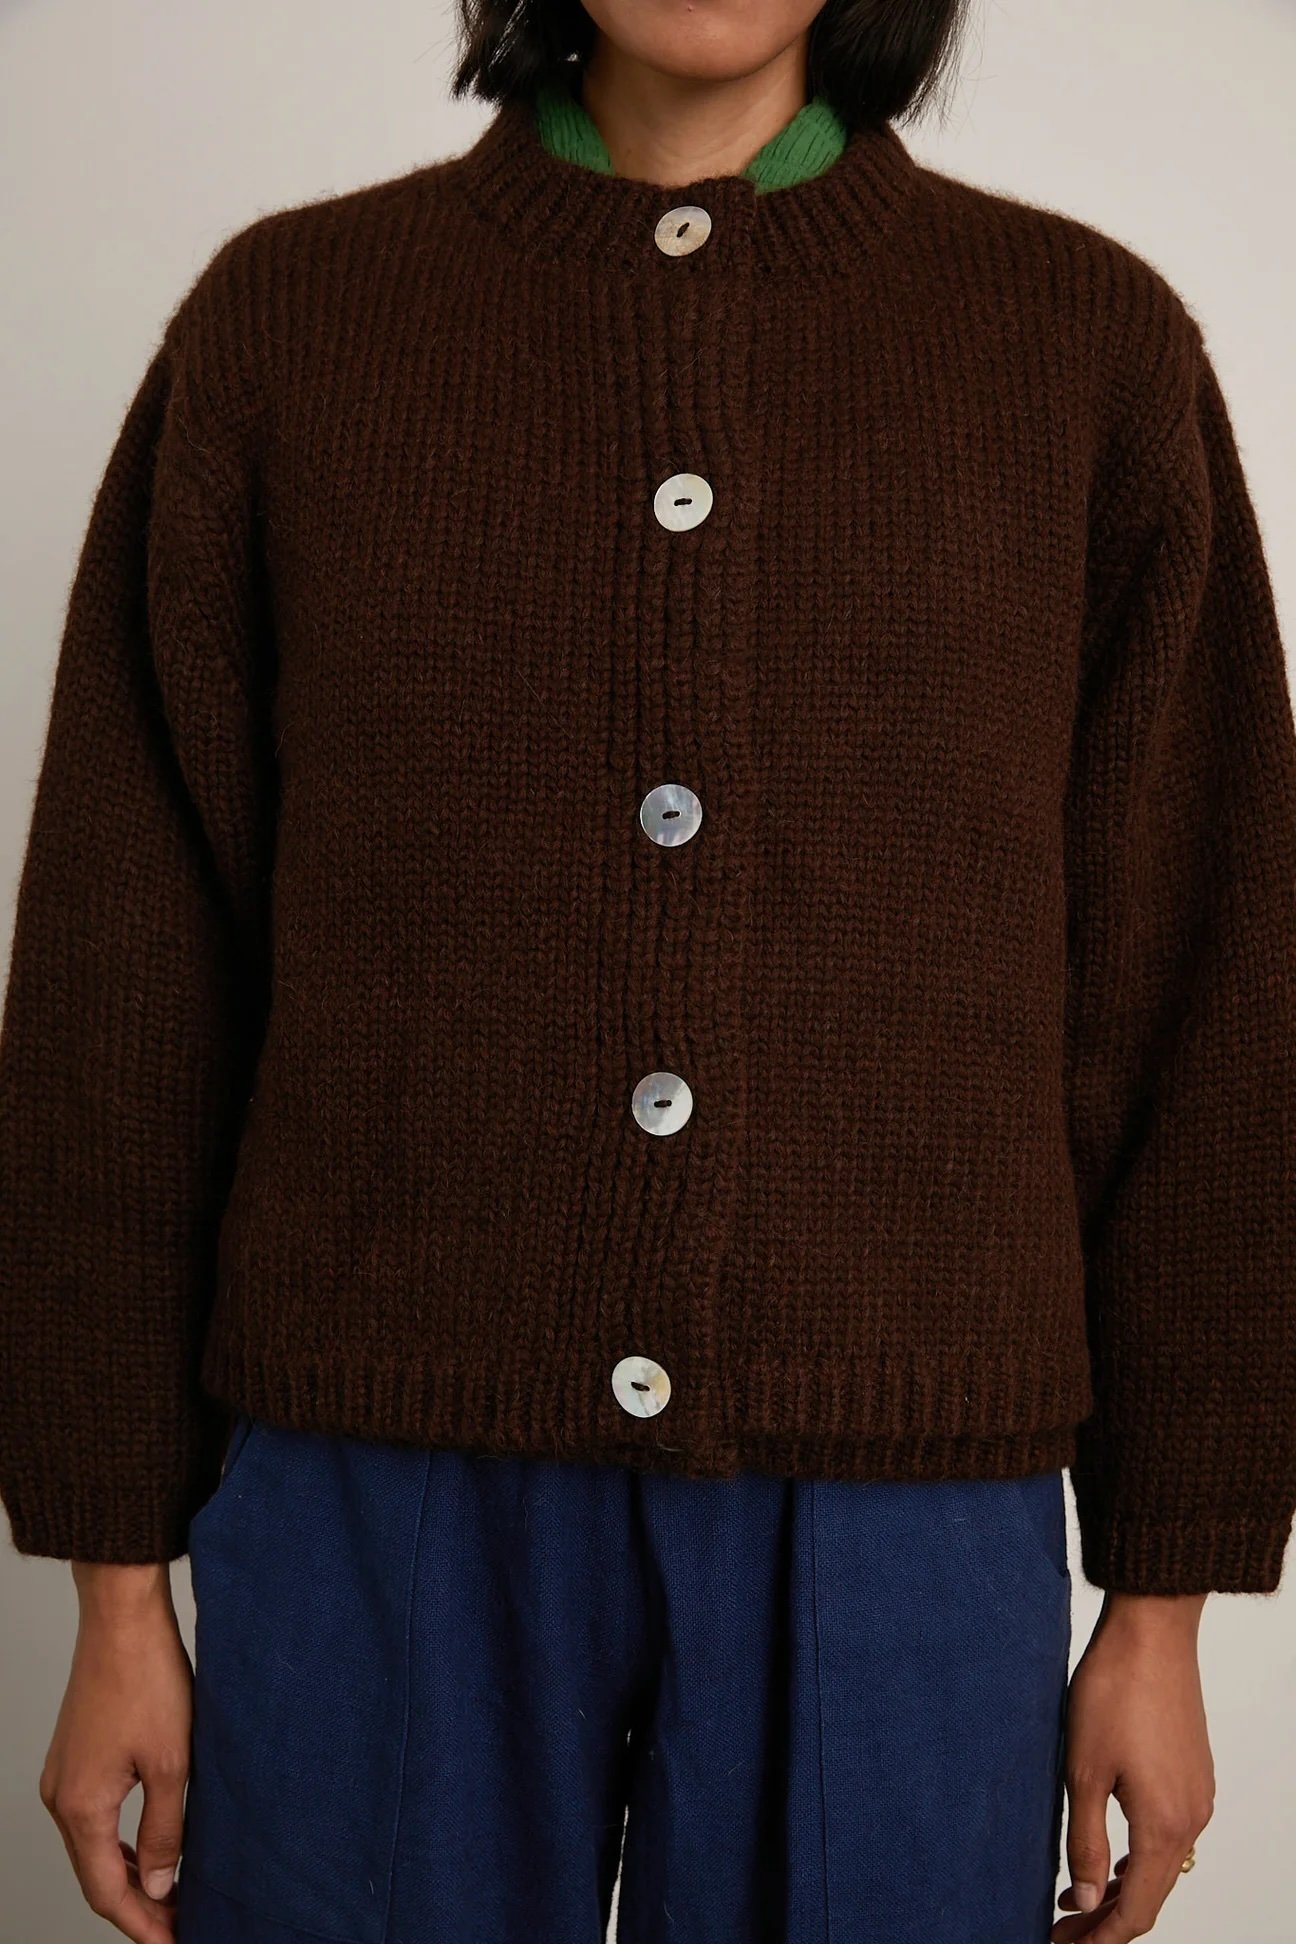 Cardigan Sweater, $422